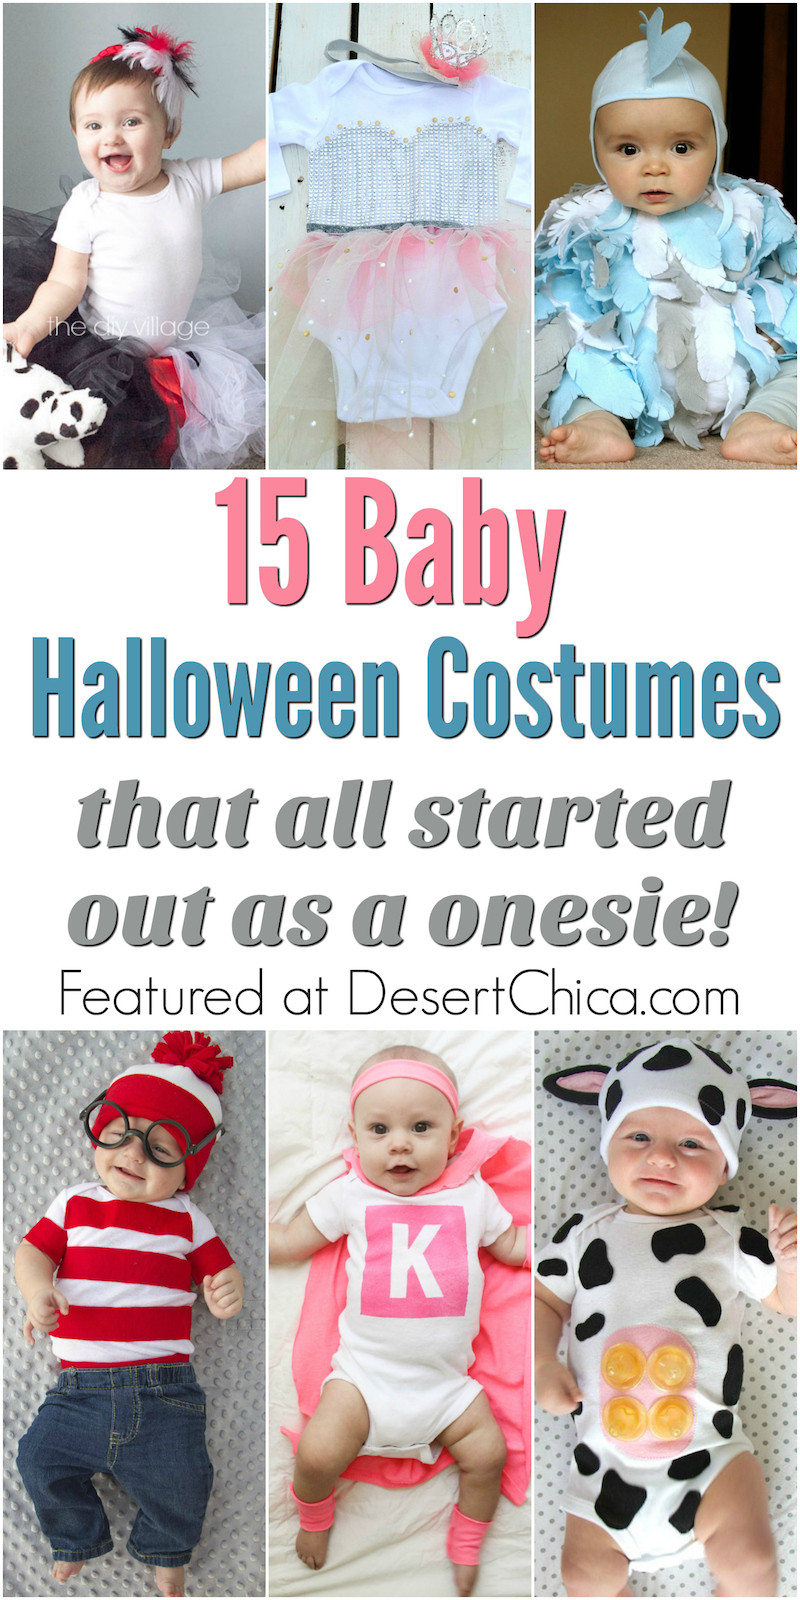 Baby Halloween Costumes DIY
 15 esie Costumes for Babies